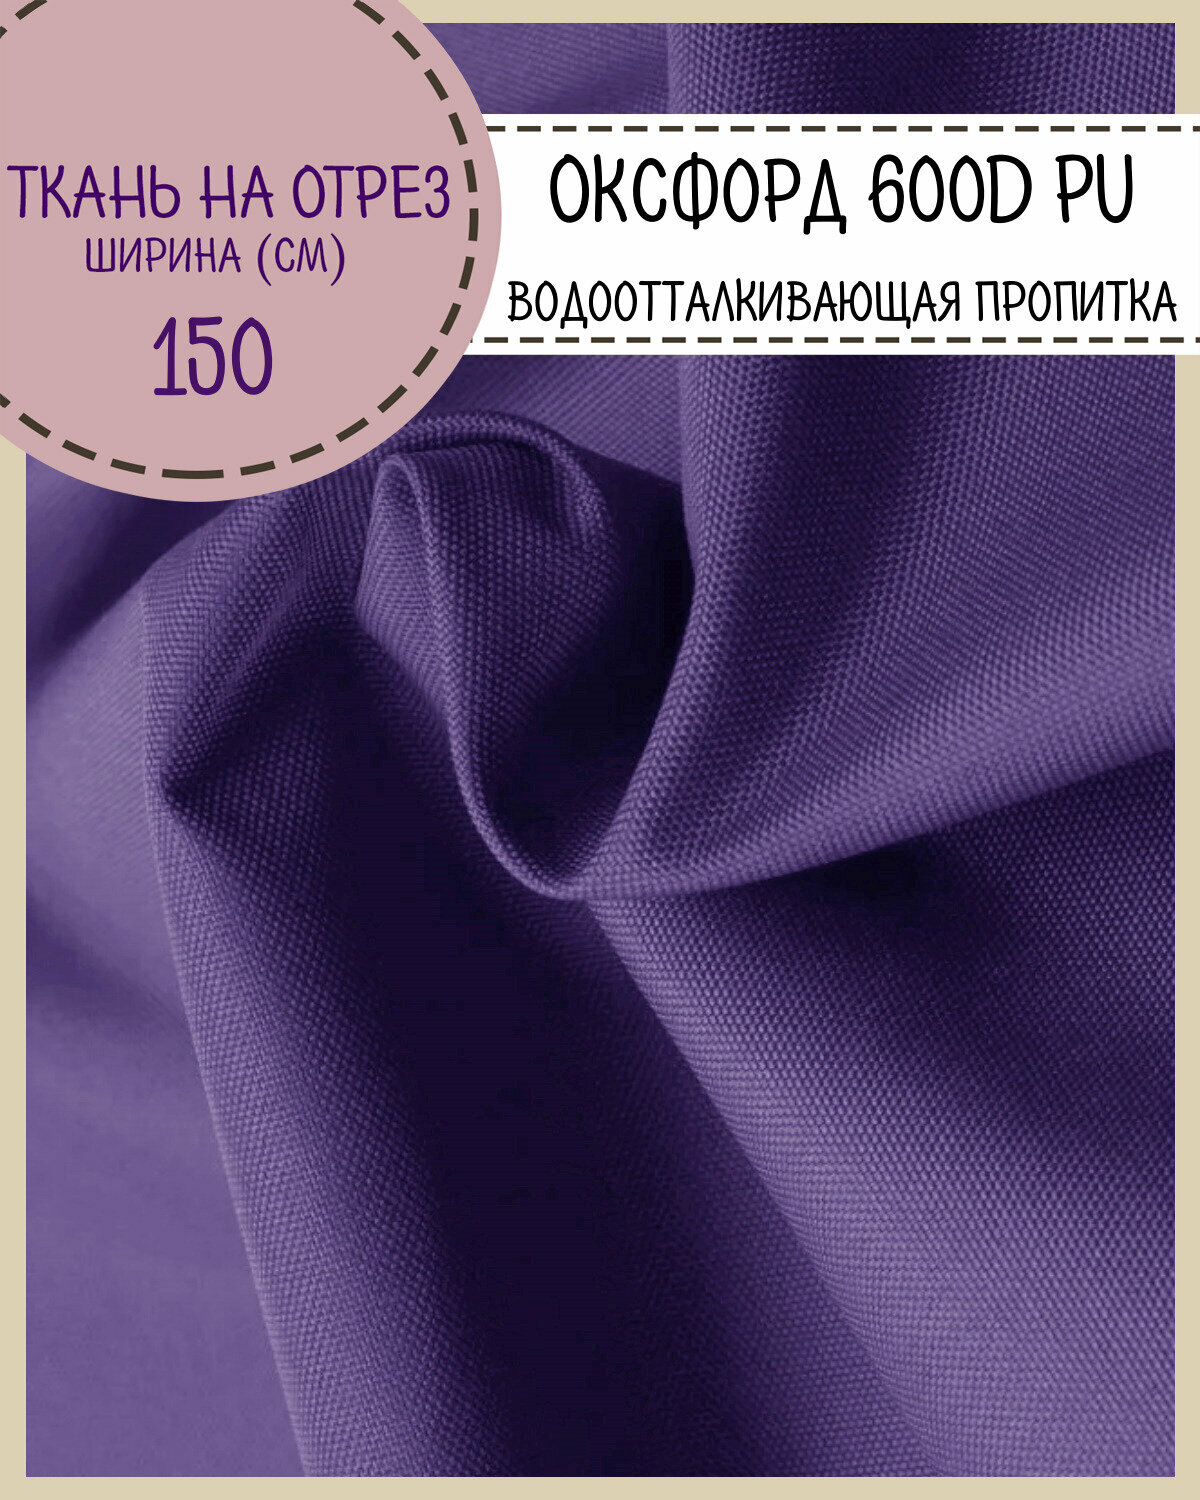 Ткань Оксфорд Oxford 600D PU 1000, пропитка водоотталкивающая, цв. ультрафиолет, ш-150 см, на отрез, цена за пог. метр